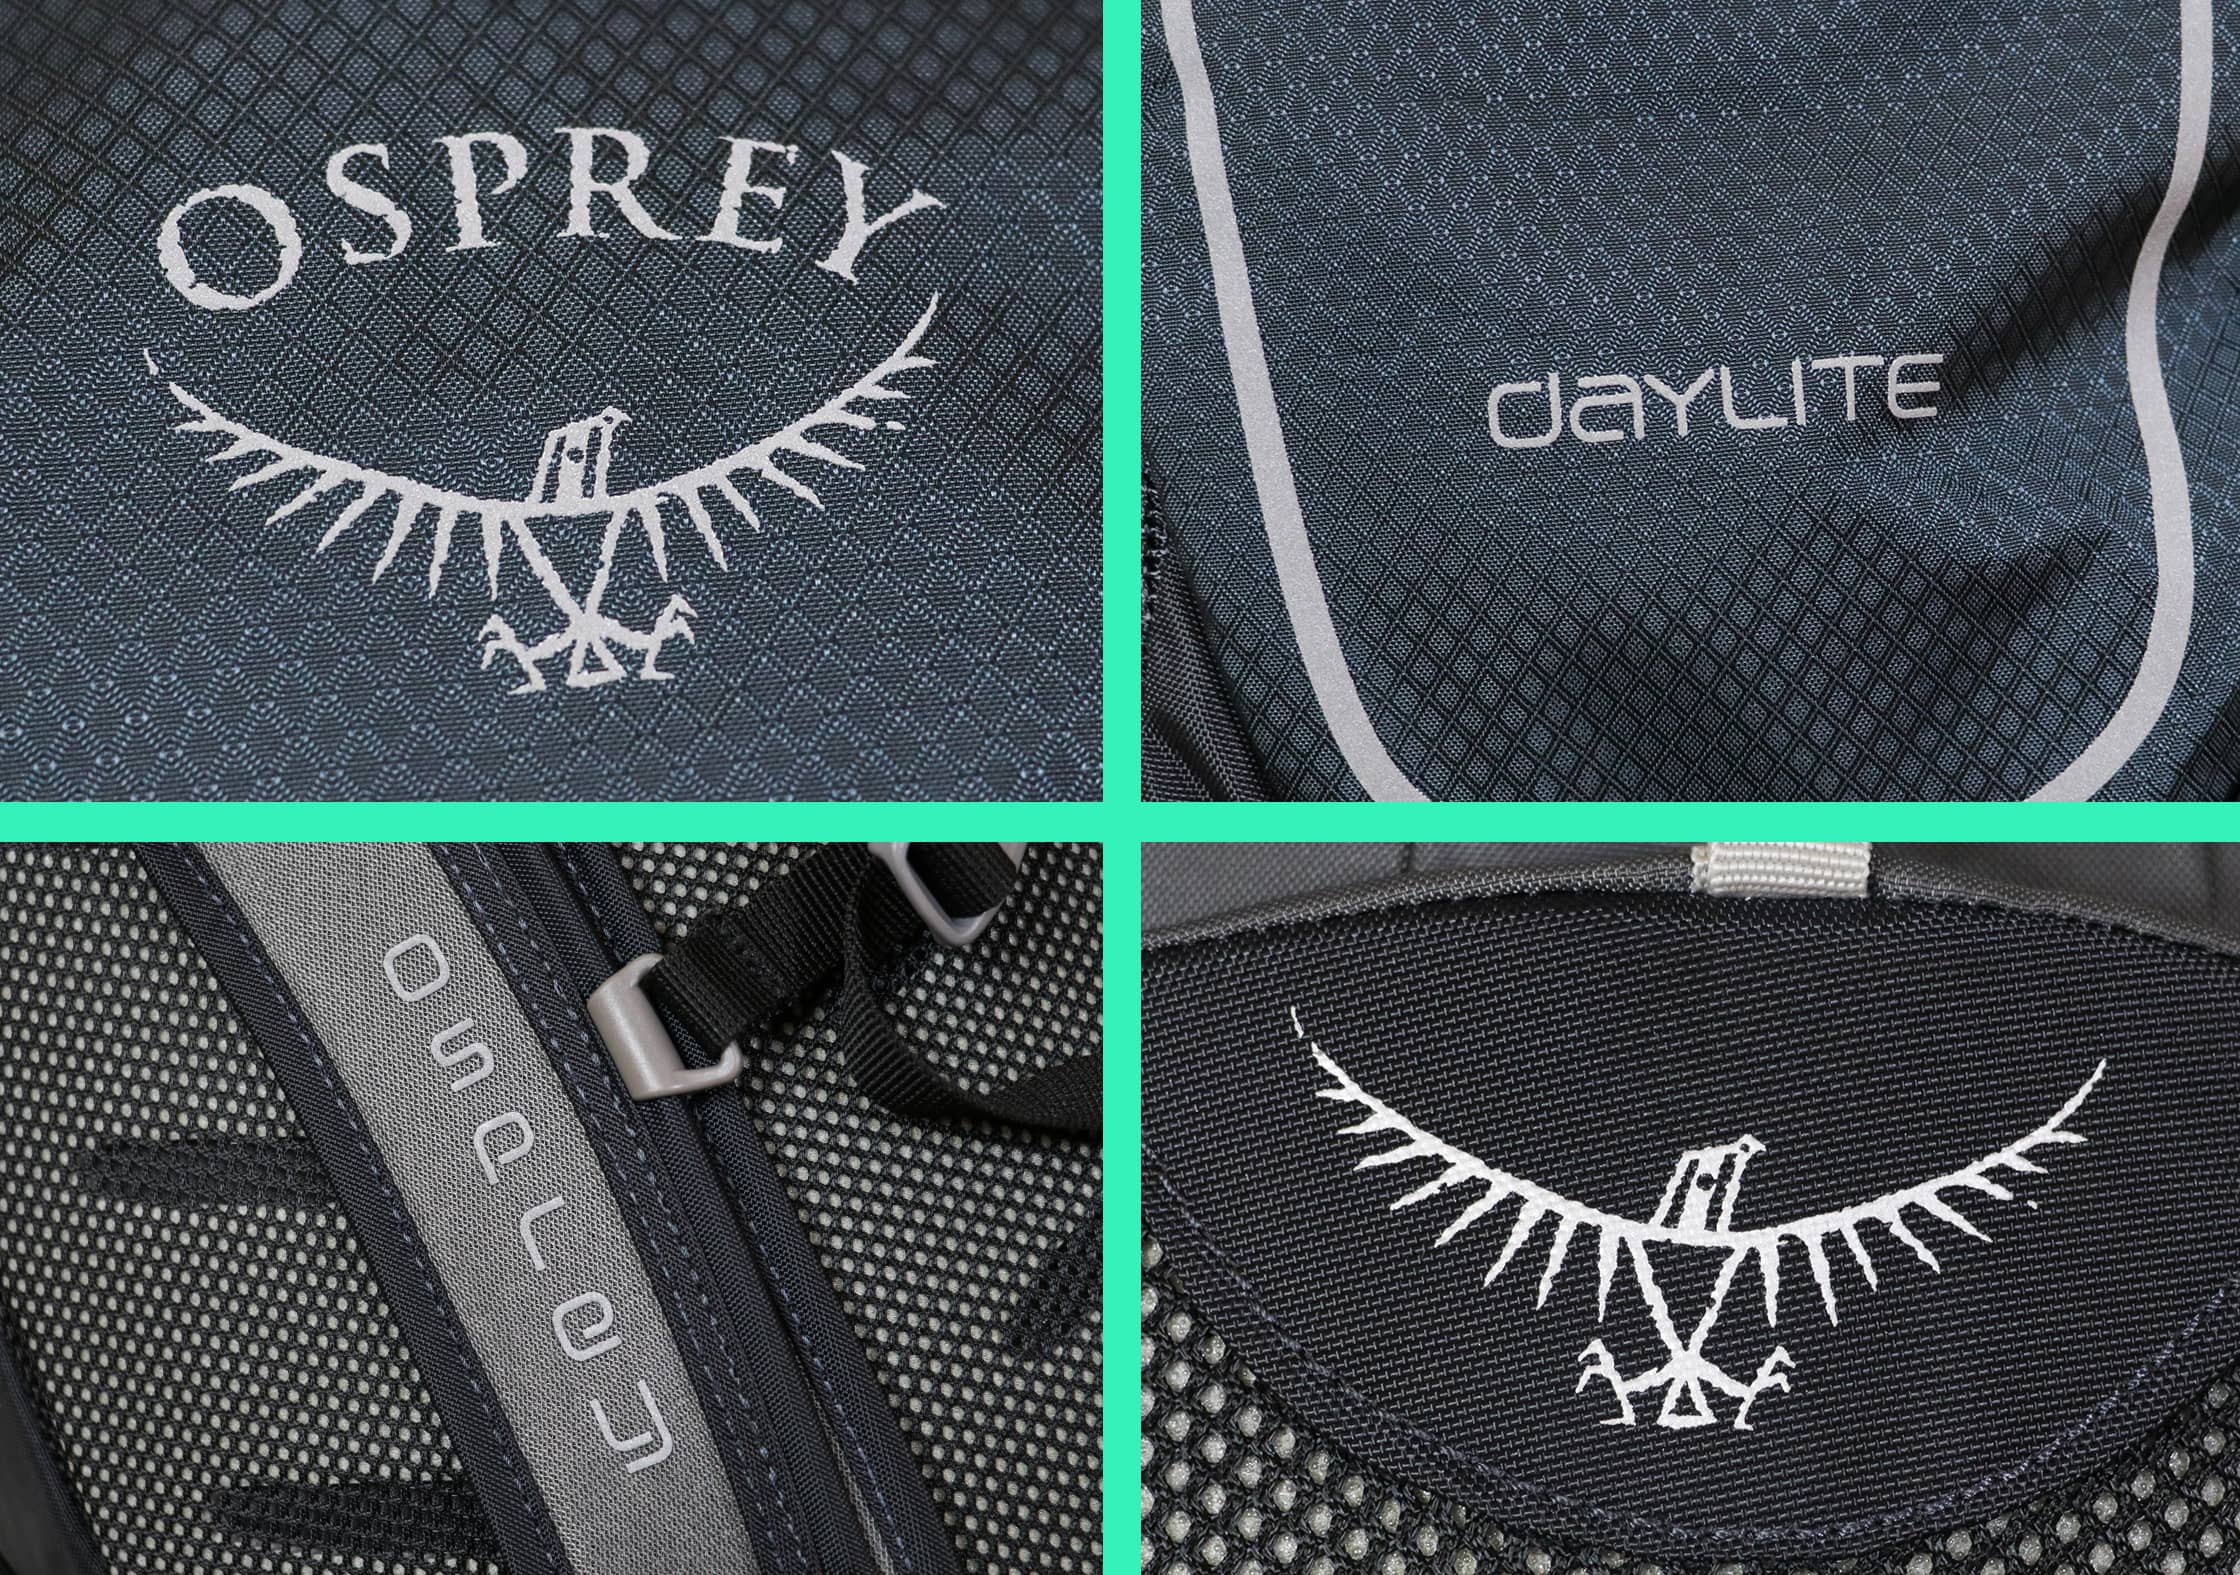 Branding On The Osprey Daylite